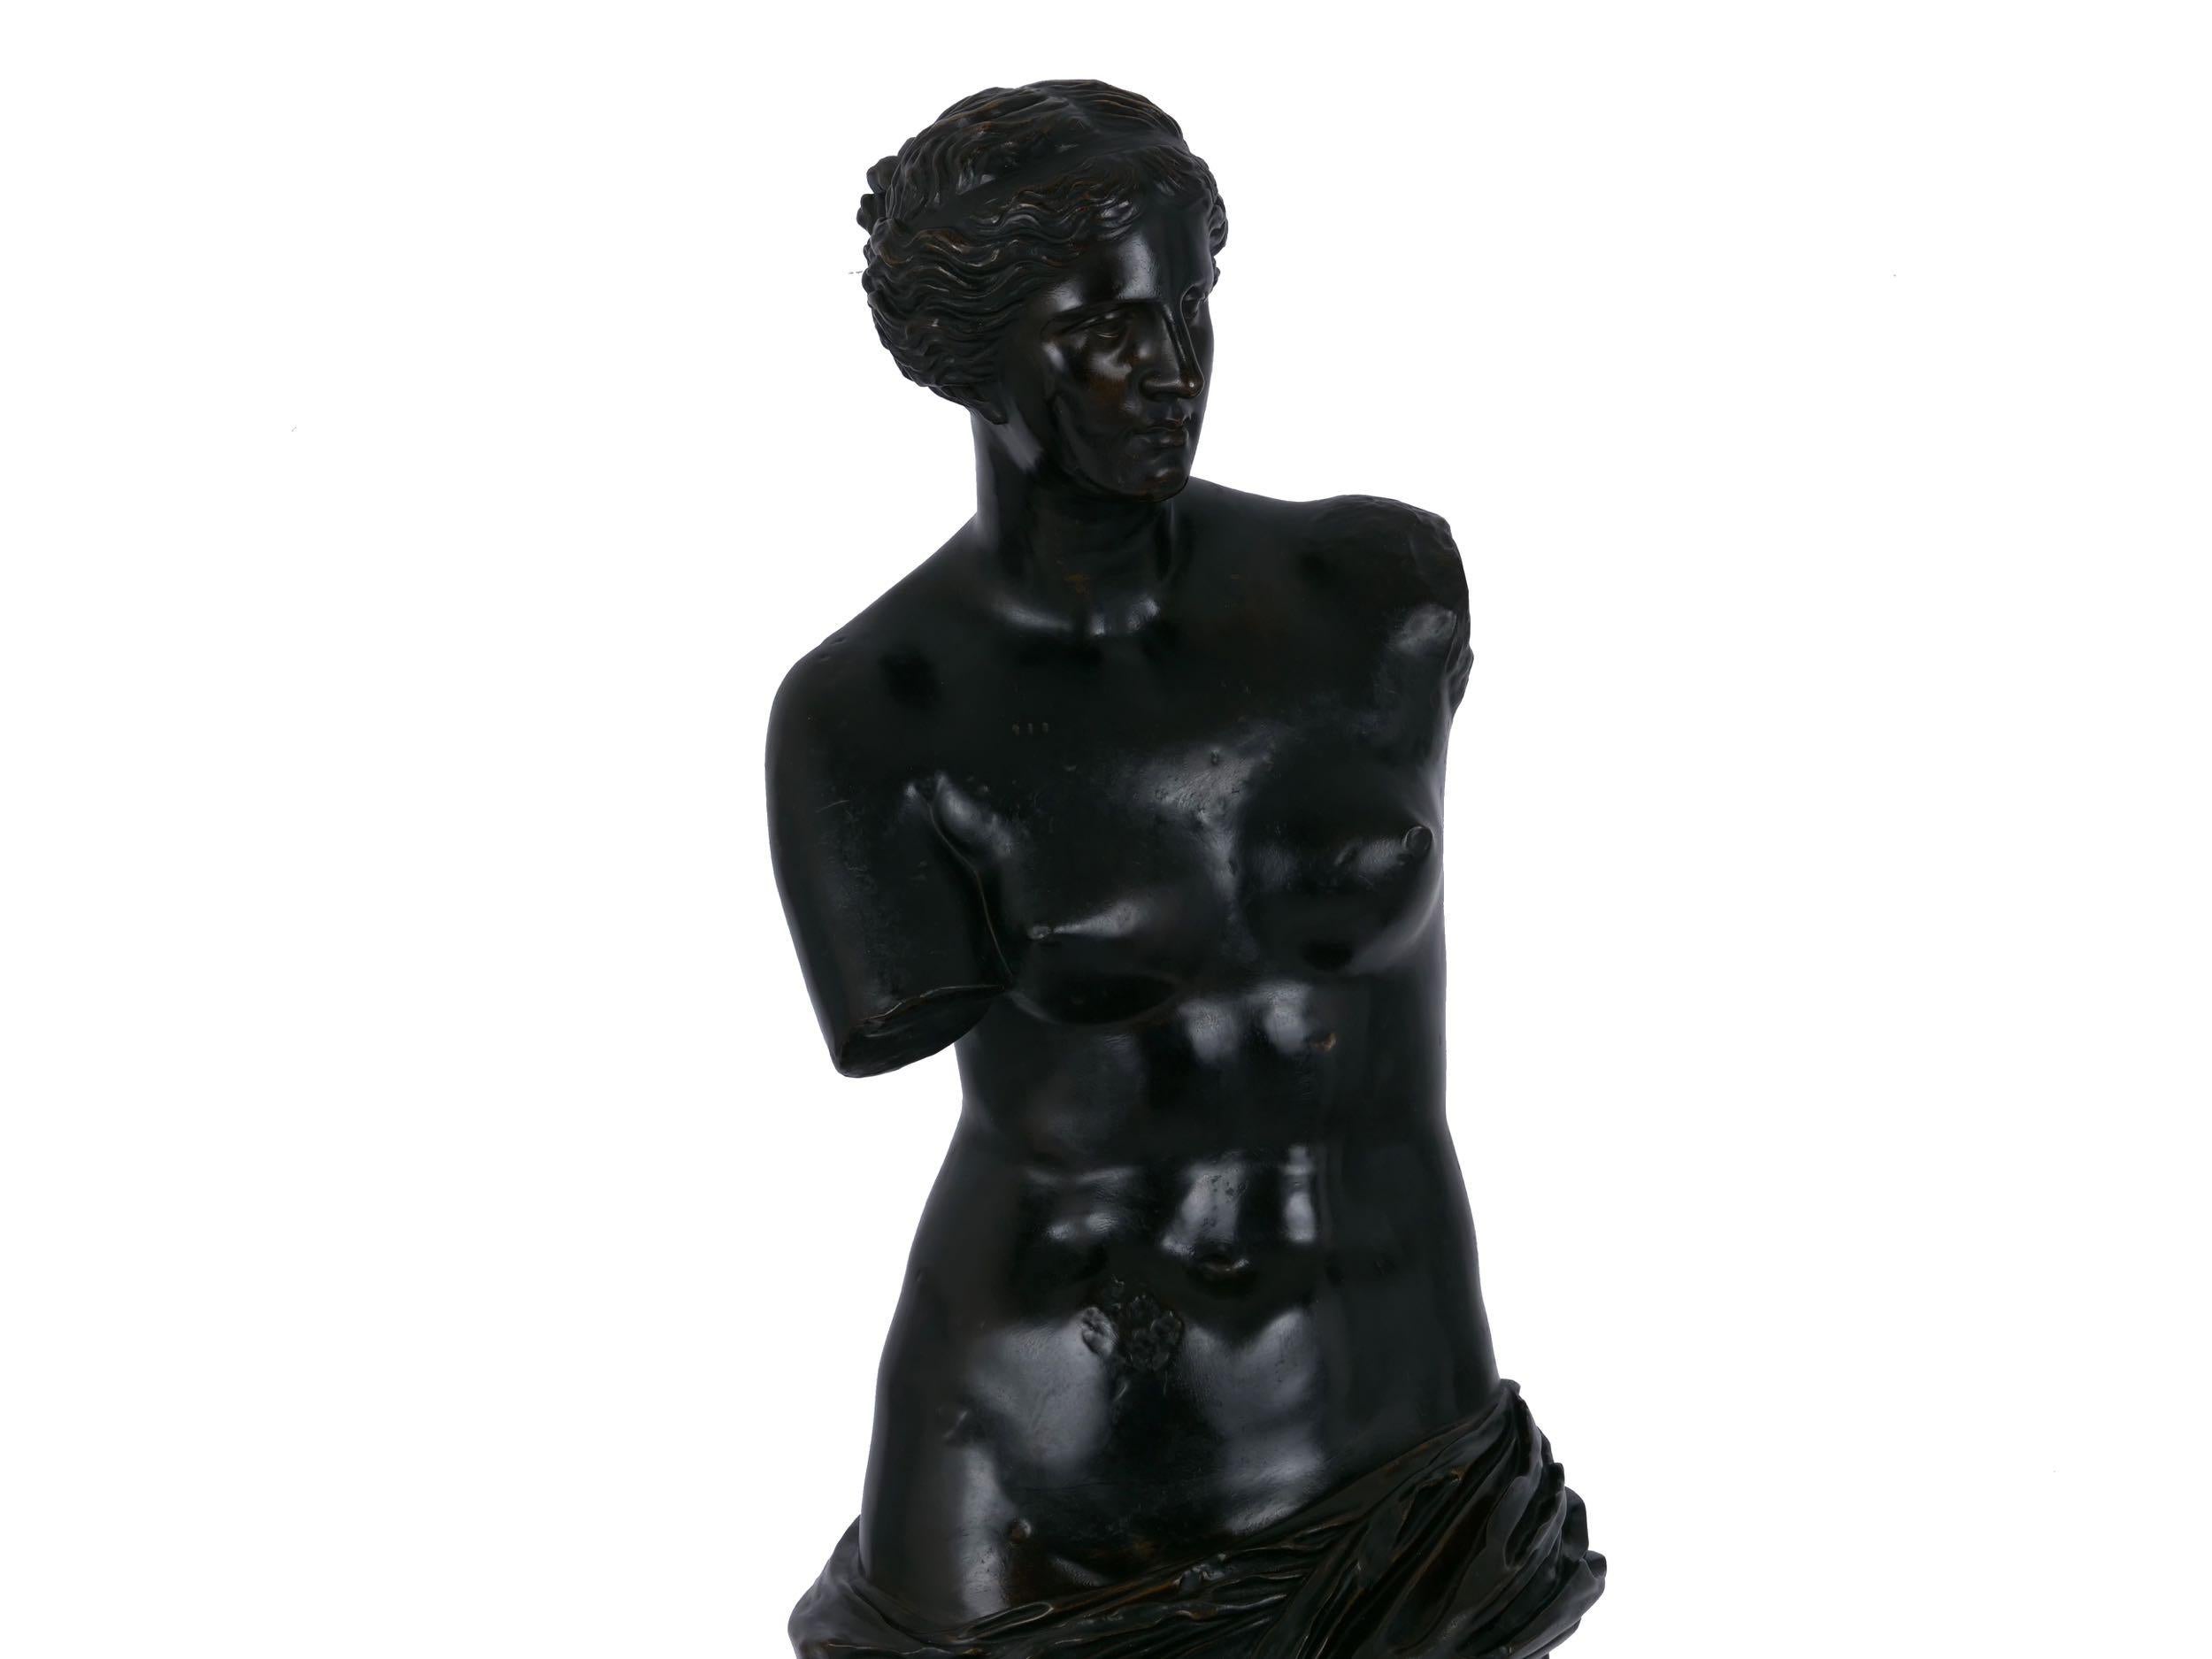 French Grand Tour Antique Bronze Sculpture 